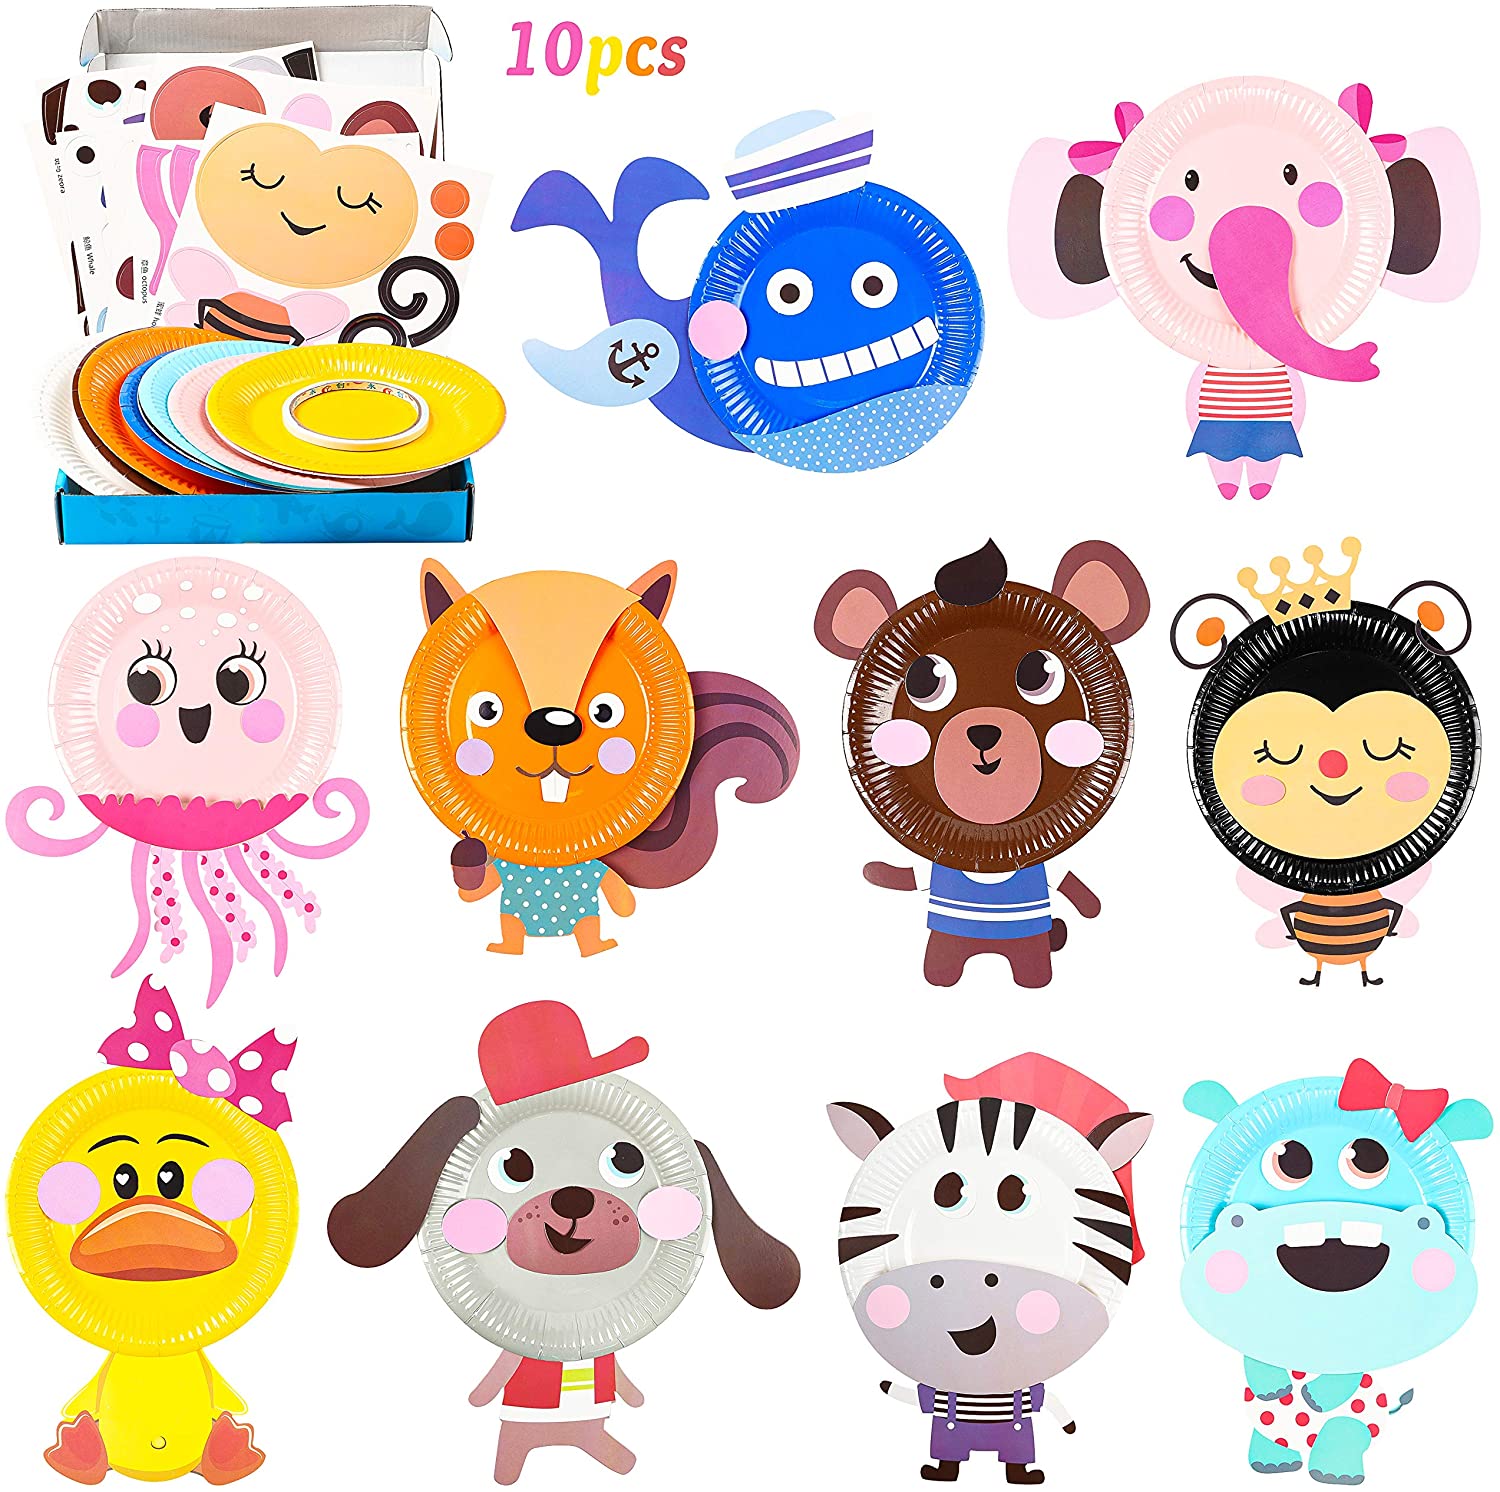 MALLMALL6, MALLMALL6 10Pcs Animal Paper Plate Art Kits for Kids DIY Craft Sticker Card Games Activity Handmade 3D Animals with Body Paper Crafts Project Classroom Supplies for Preschool Toddler Boys Girls